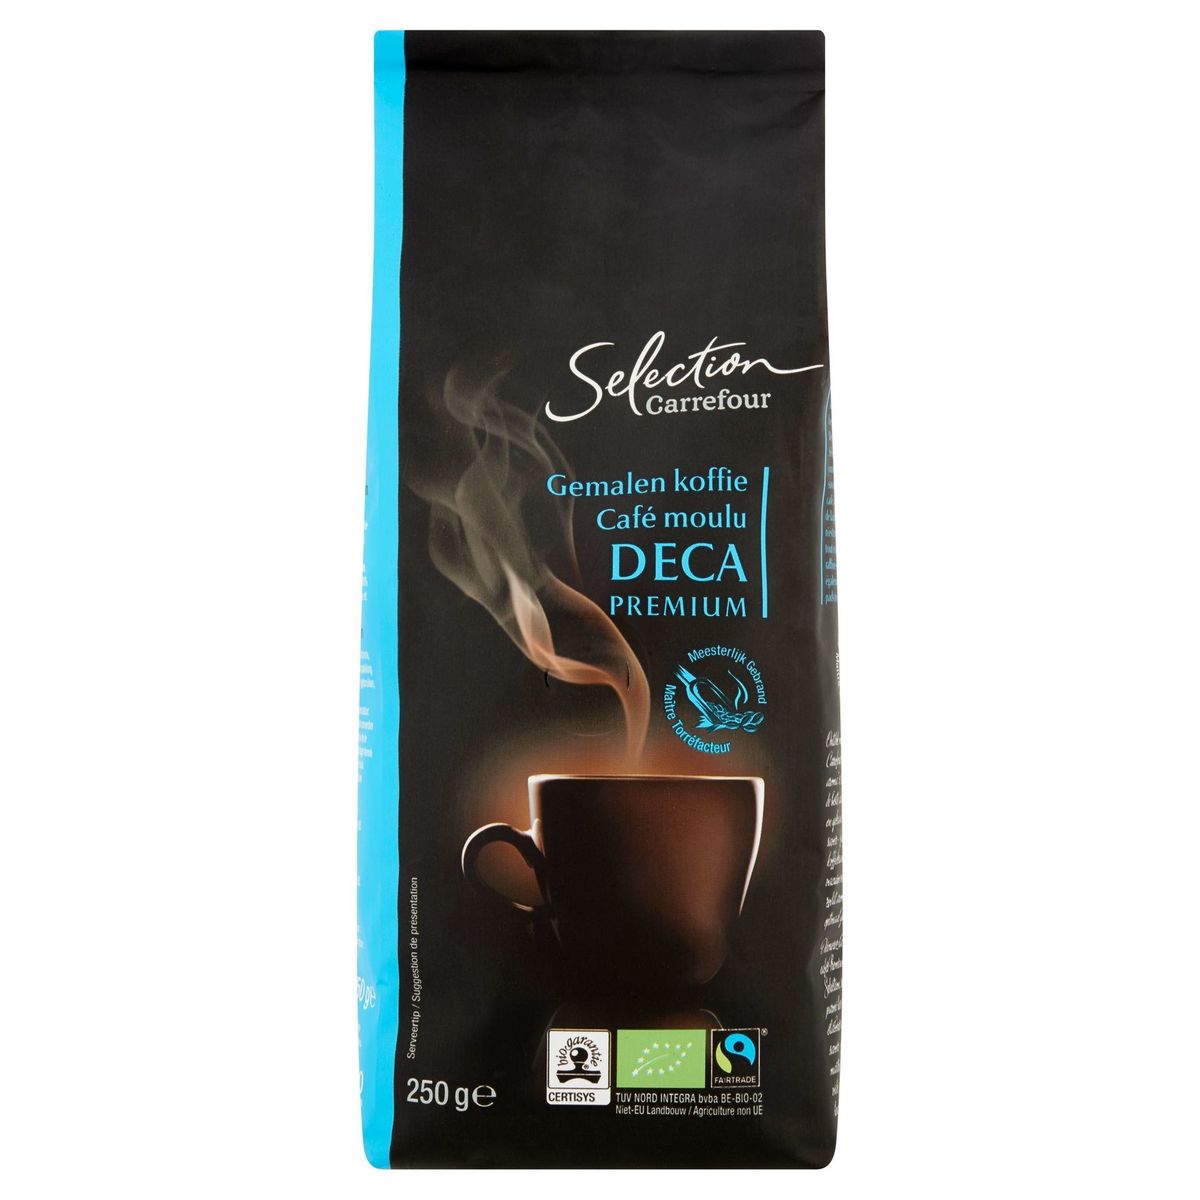 Carrefour Selection Gemalen Koffie Deca Premium 250 g